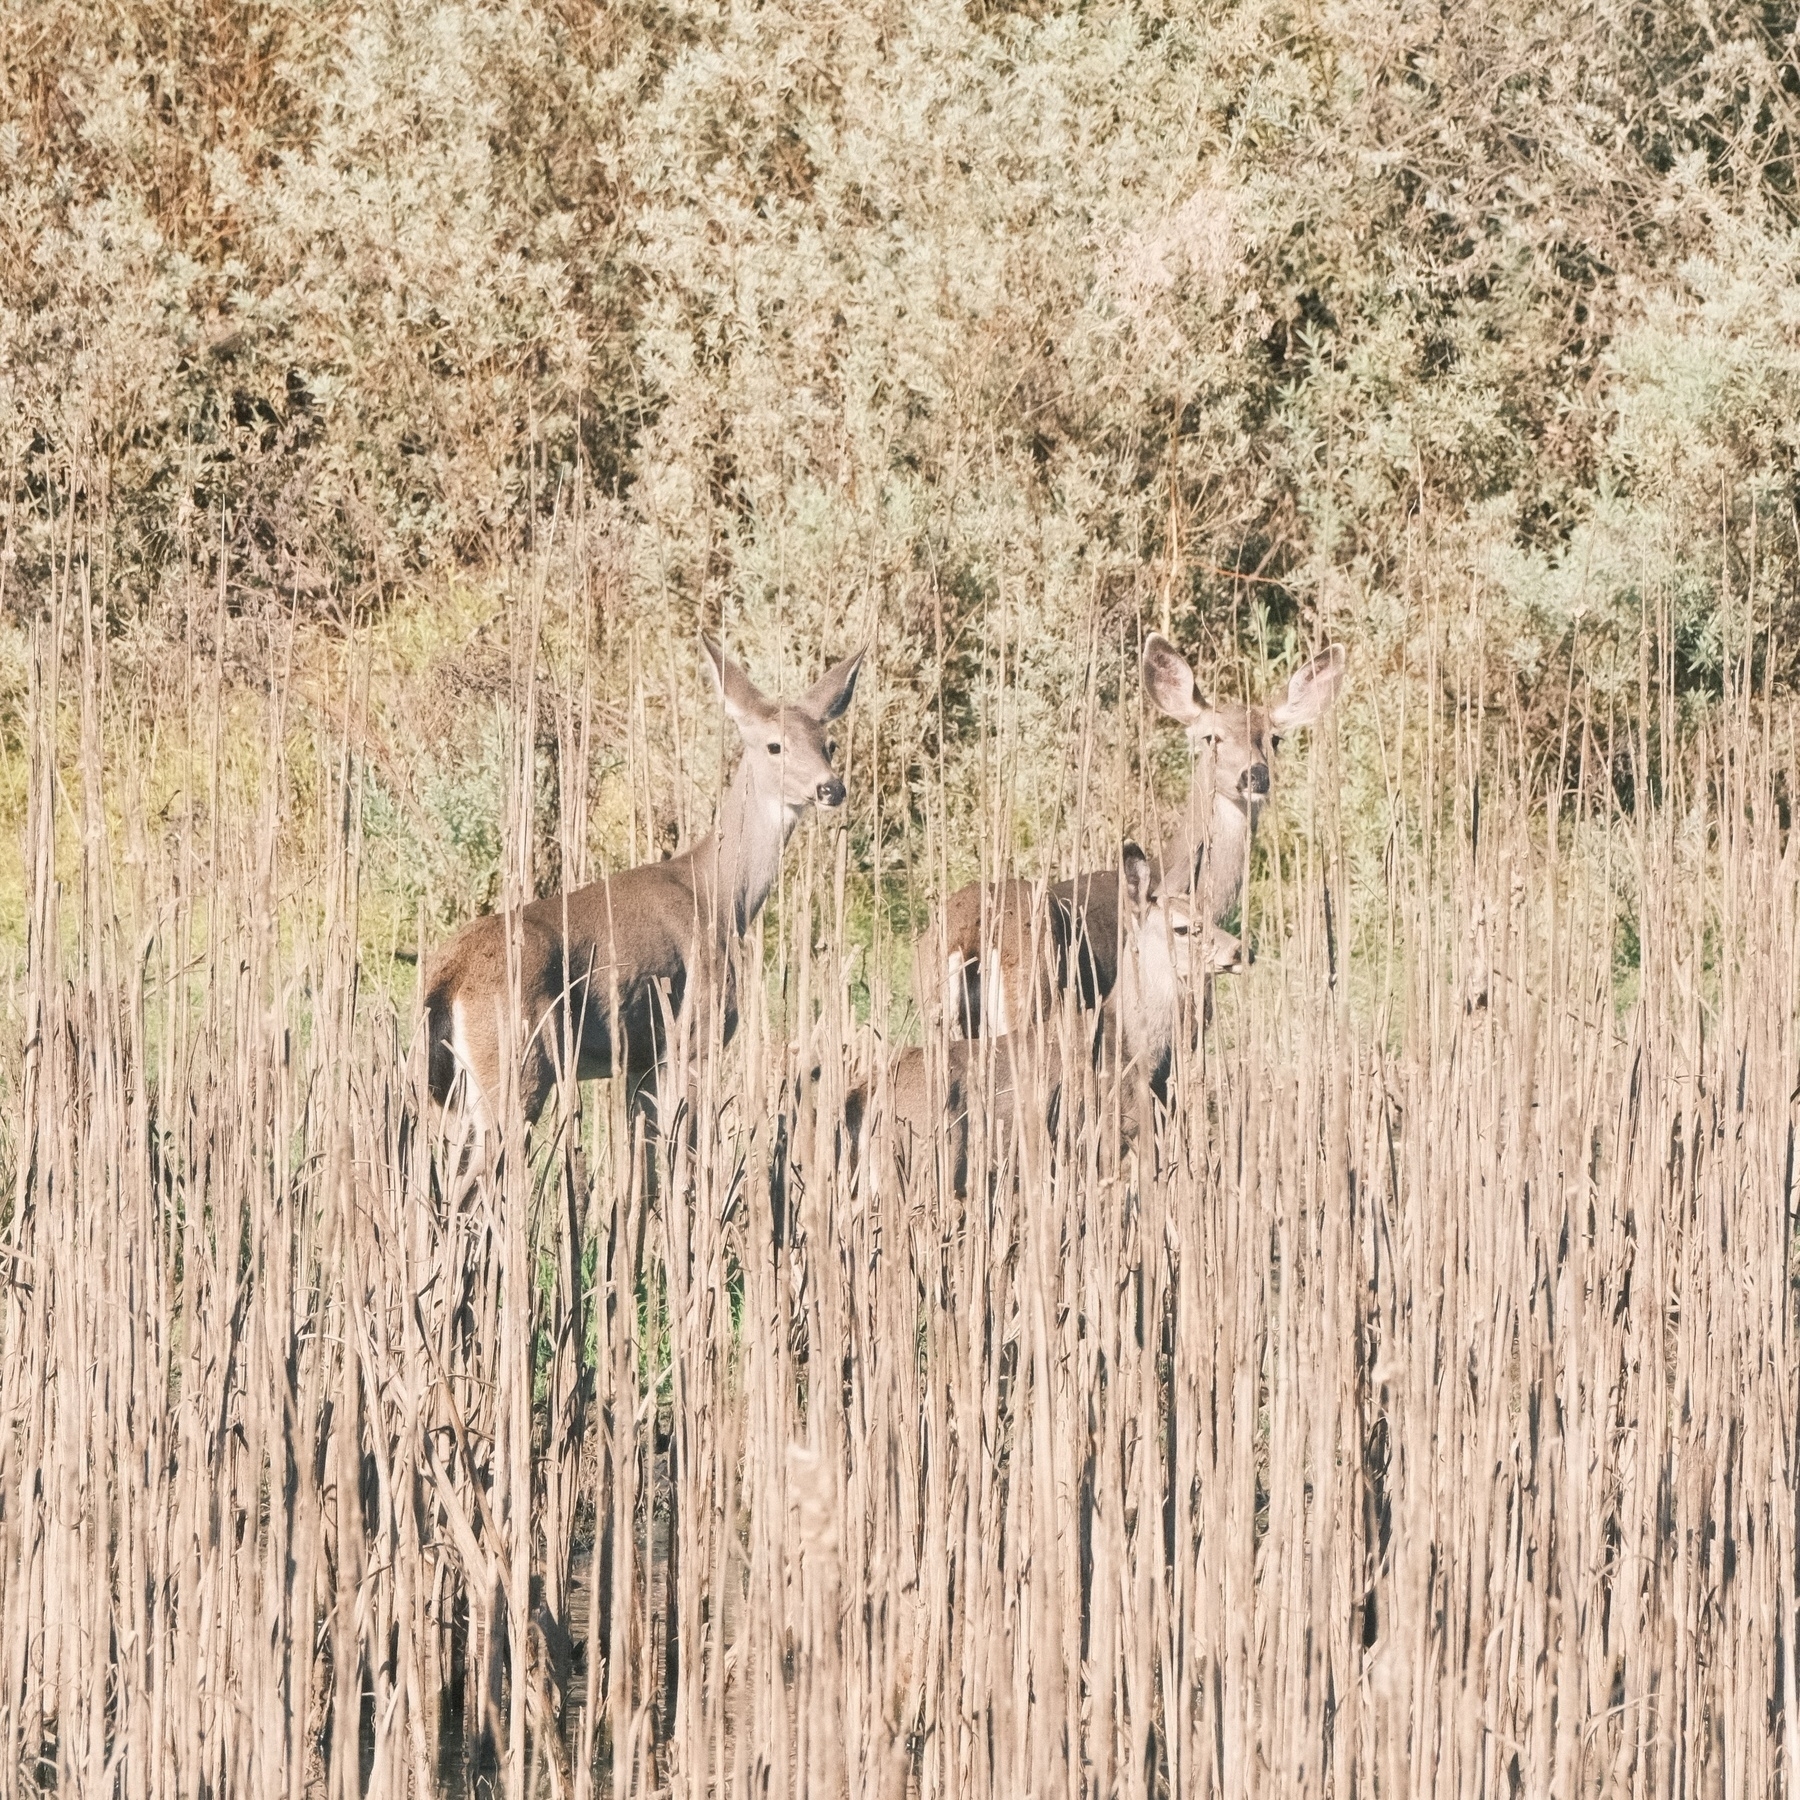 At least three Mule Deer in tall brown reeds, looking back towards the human interlopers.